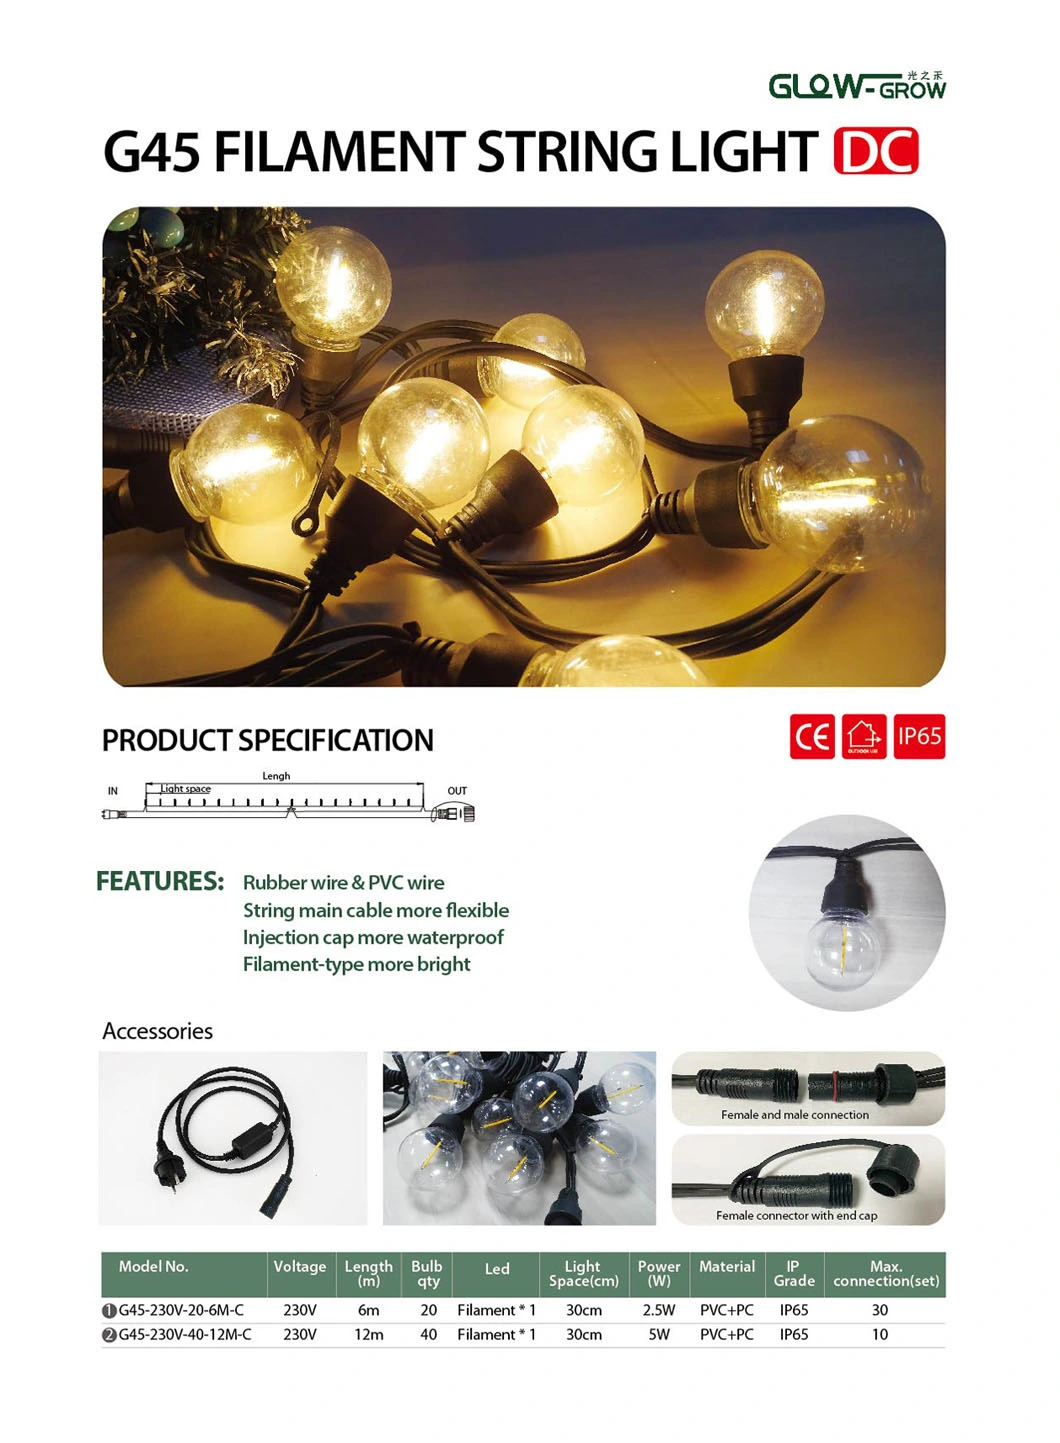 G45 IP65 UL Listed Filament String Light Festoon Light for Holiday Decoration